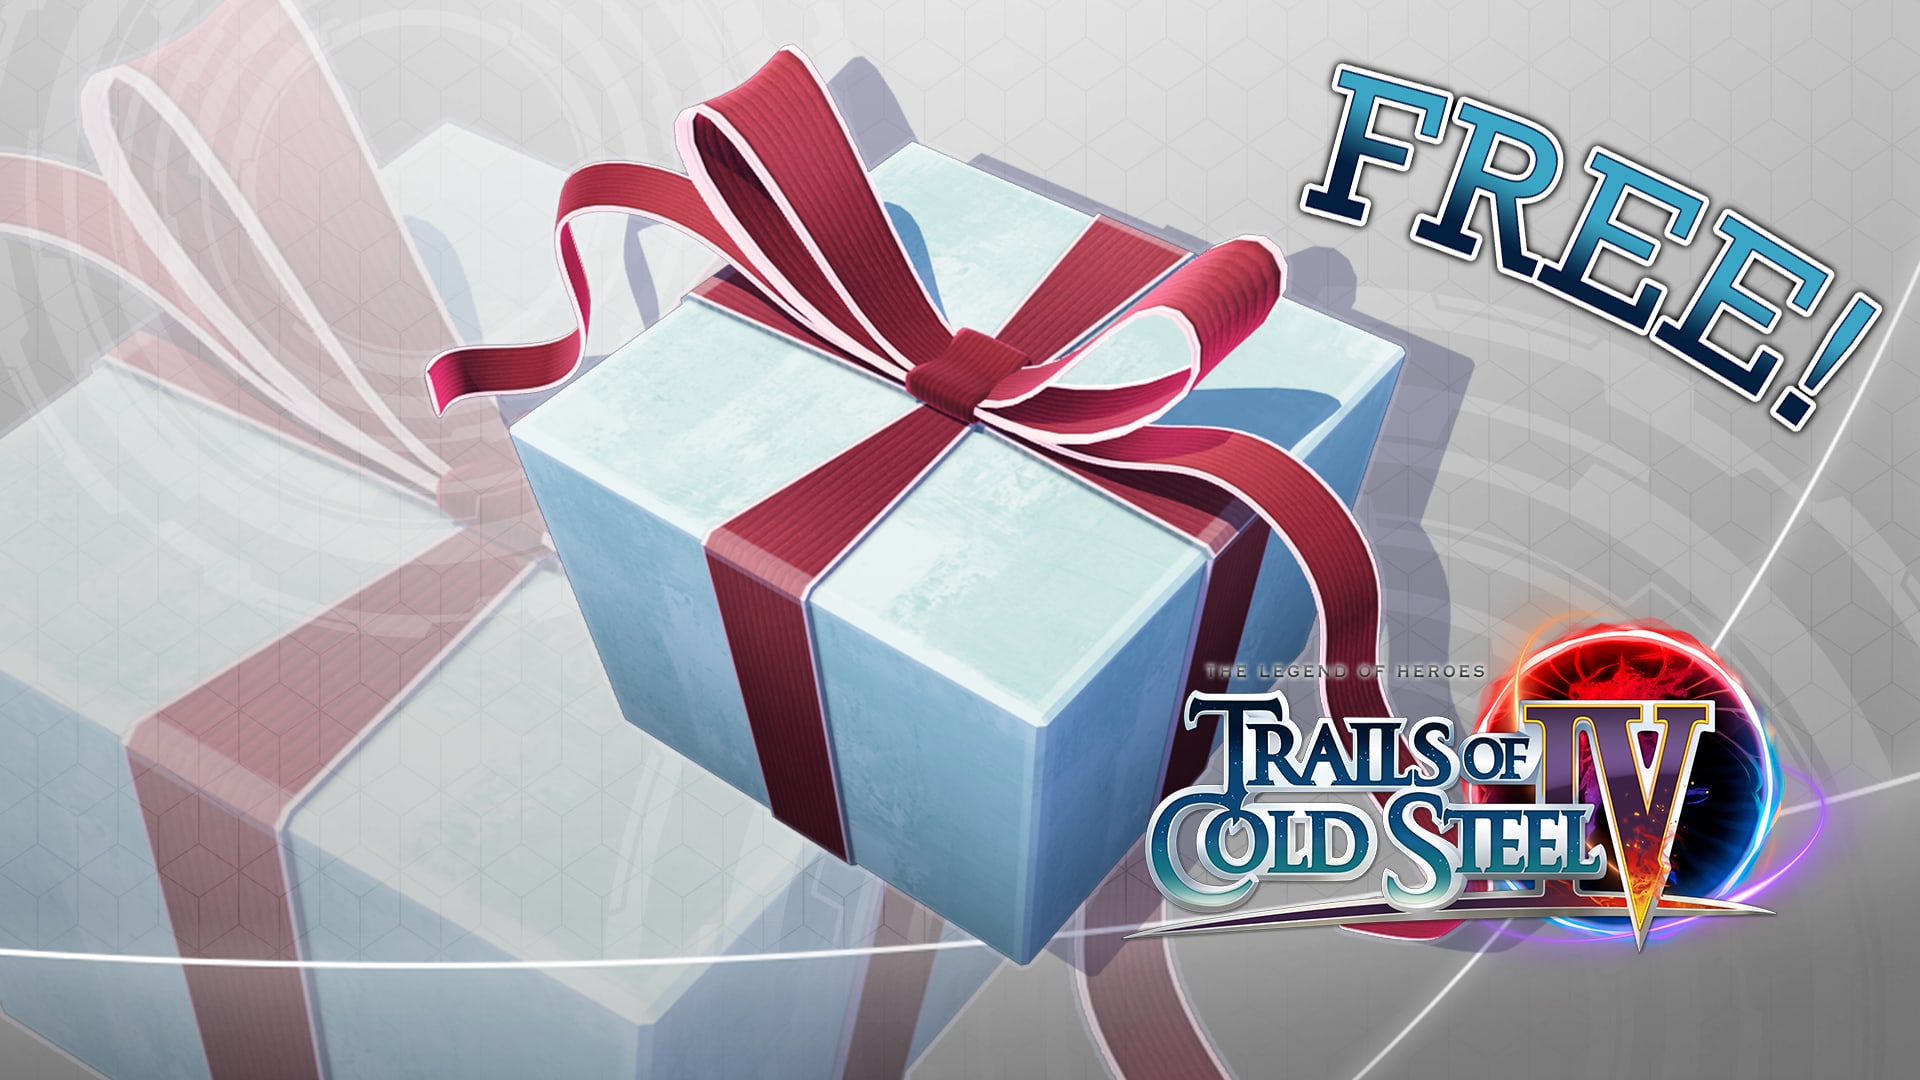 Trails of Cold Steel IV: Free Sample Set B